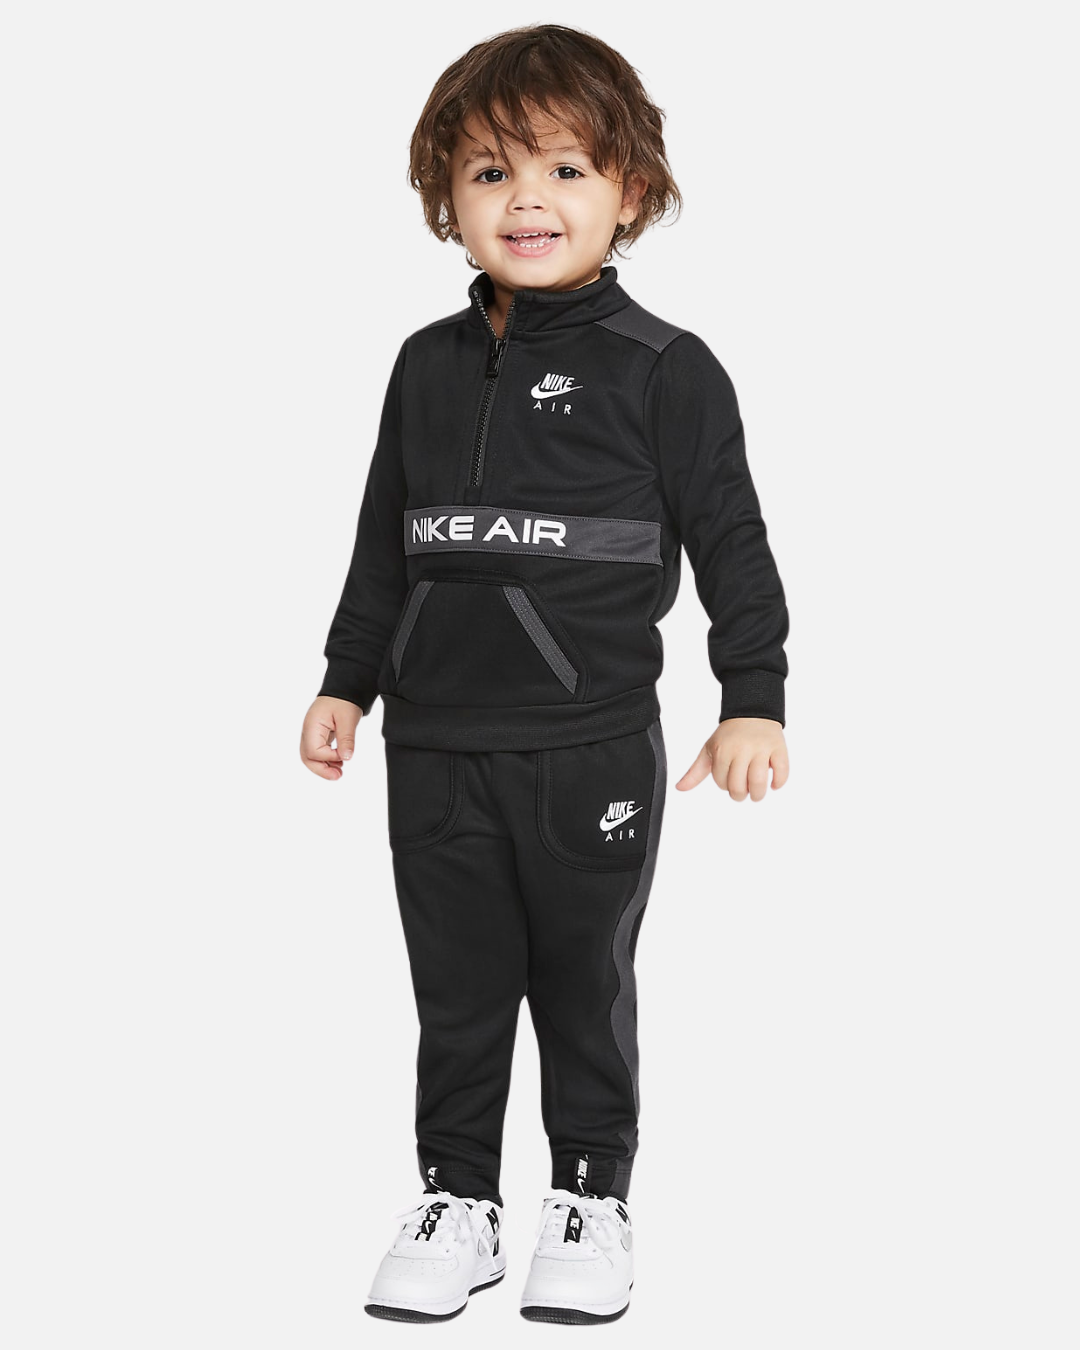 Baby Nike Air Tracksuit Set - Black/White/Grey